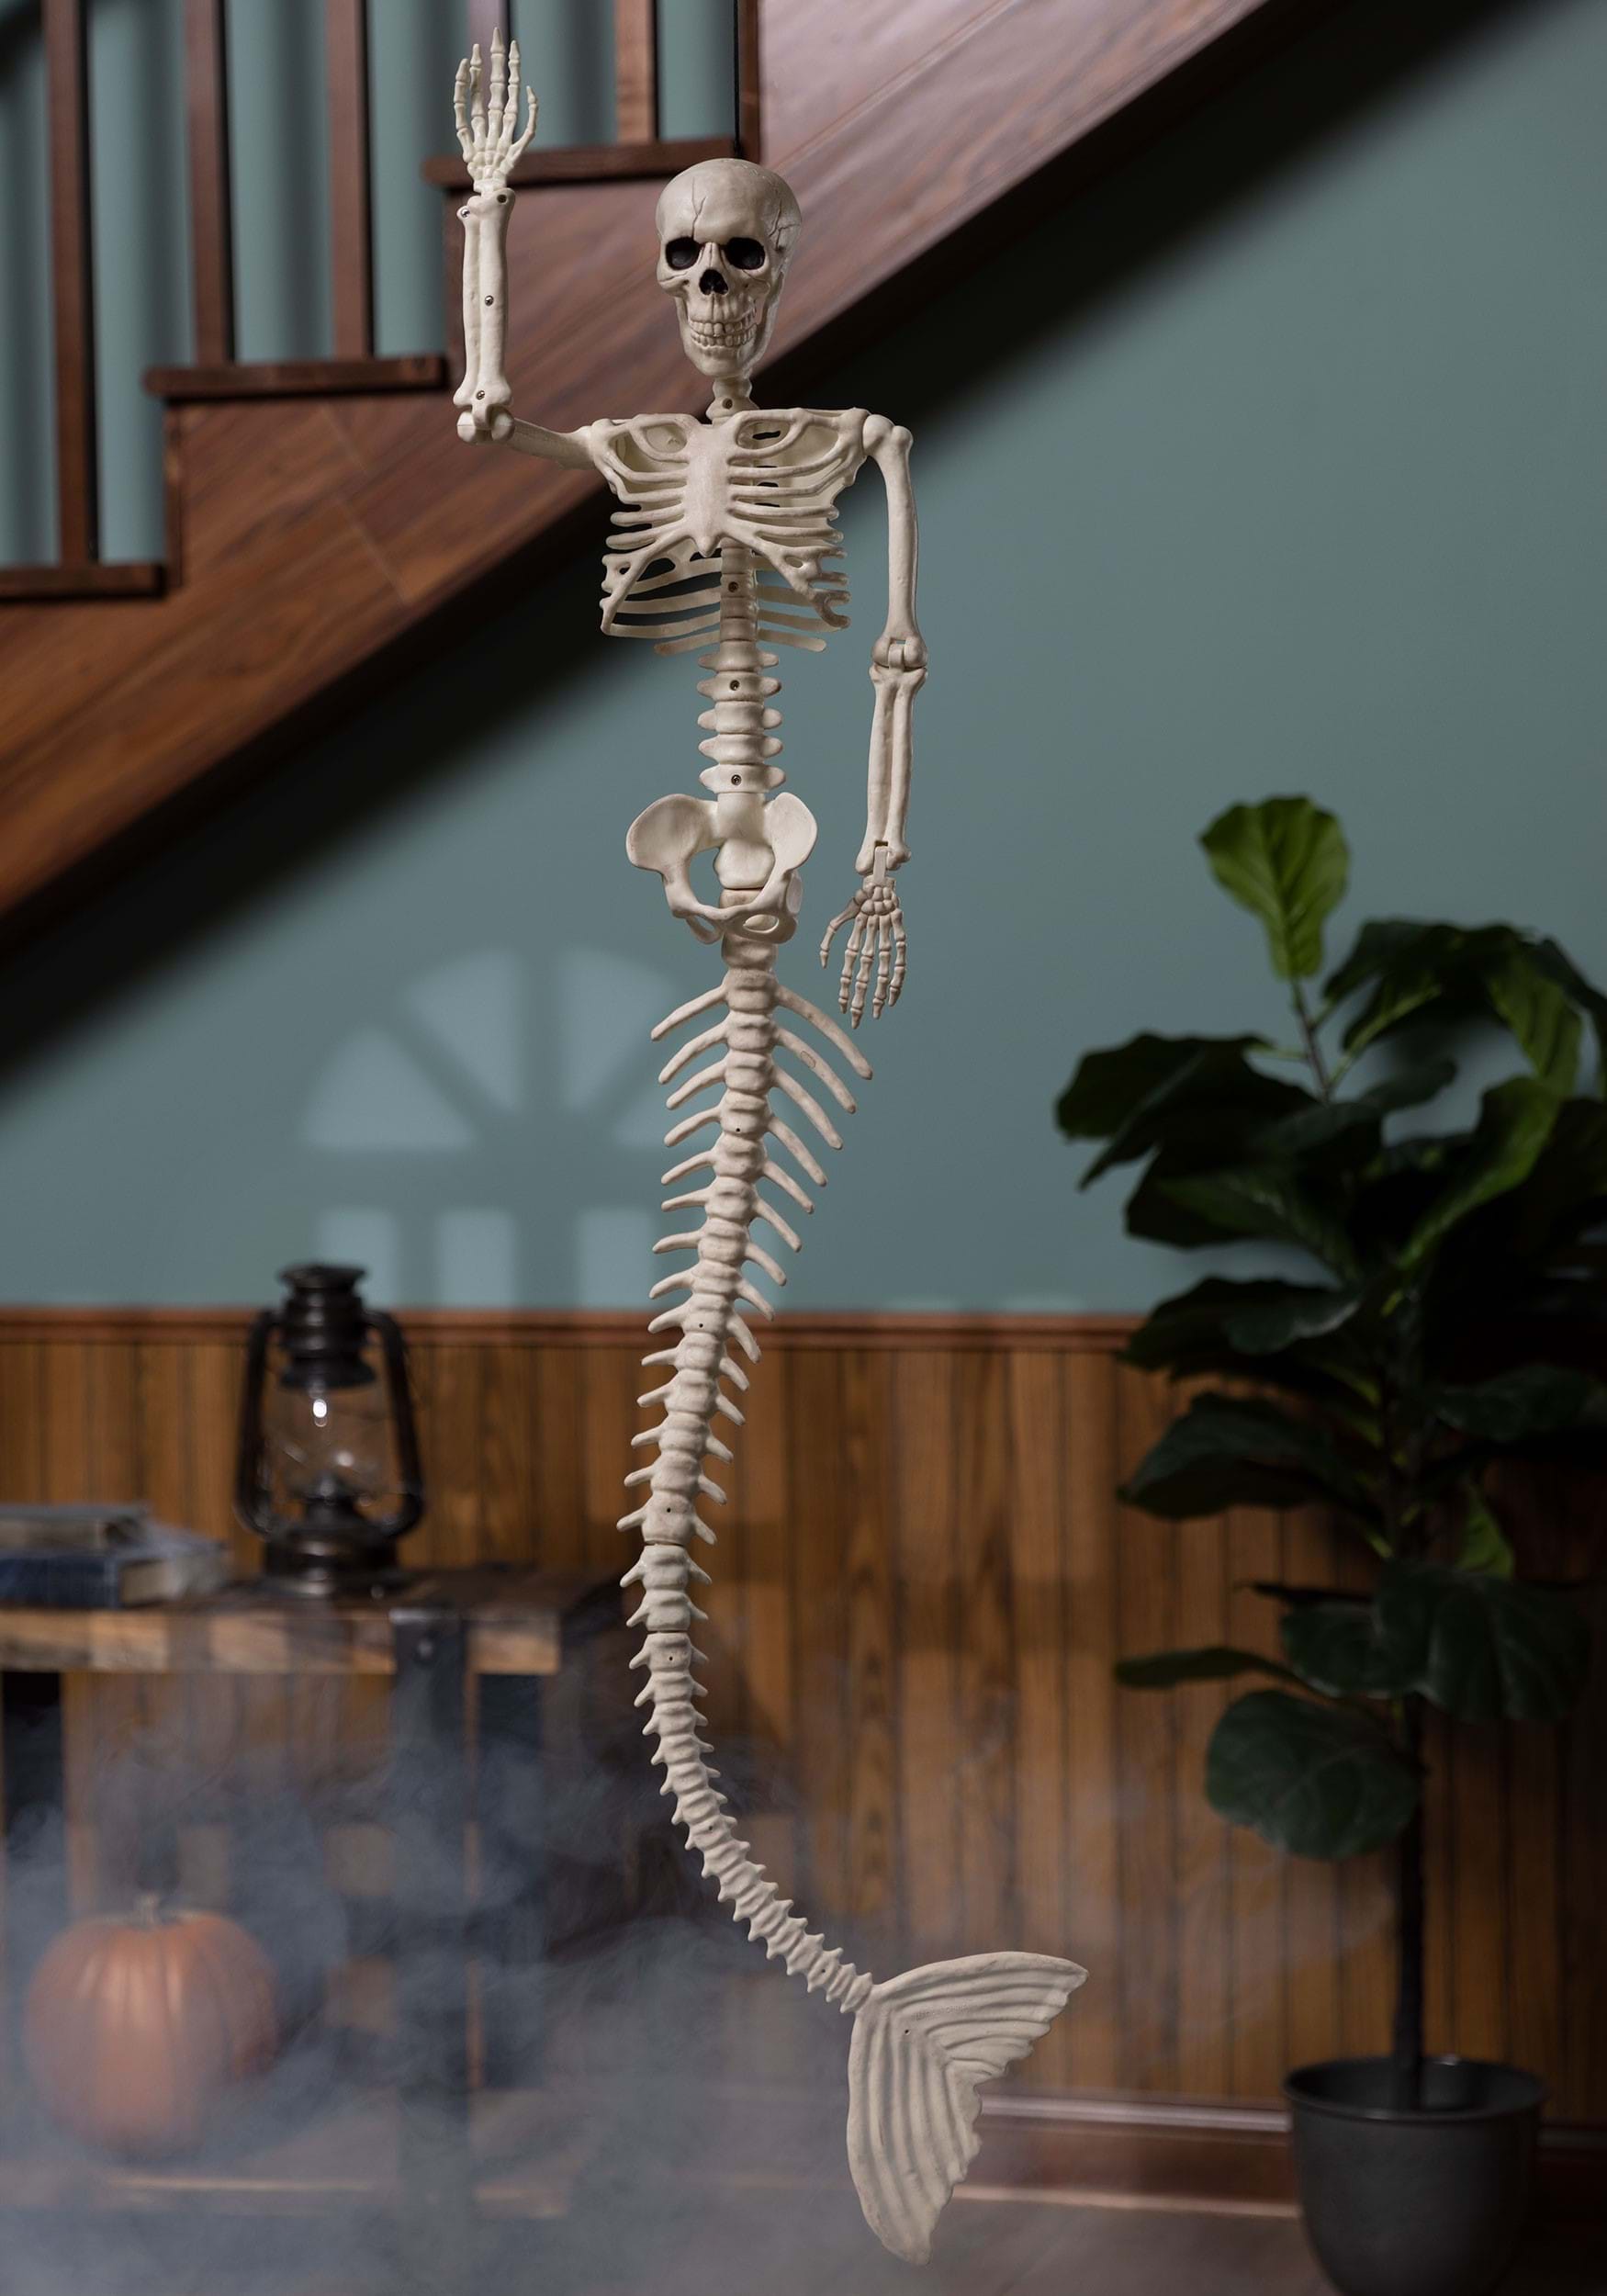 48 Inch Mermaid Skeleton Decoration | Skeleton and Skull Decorations